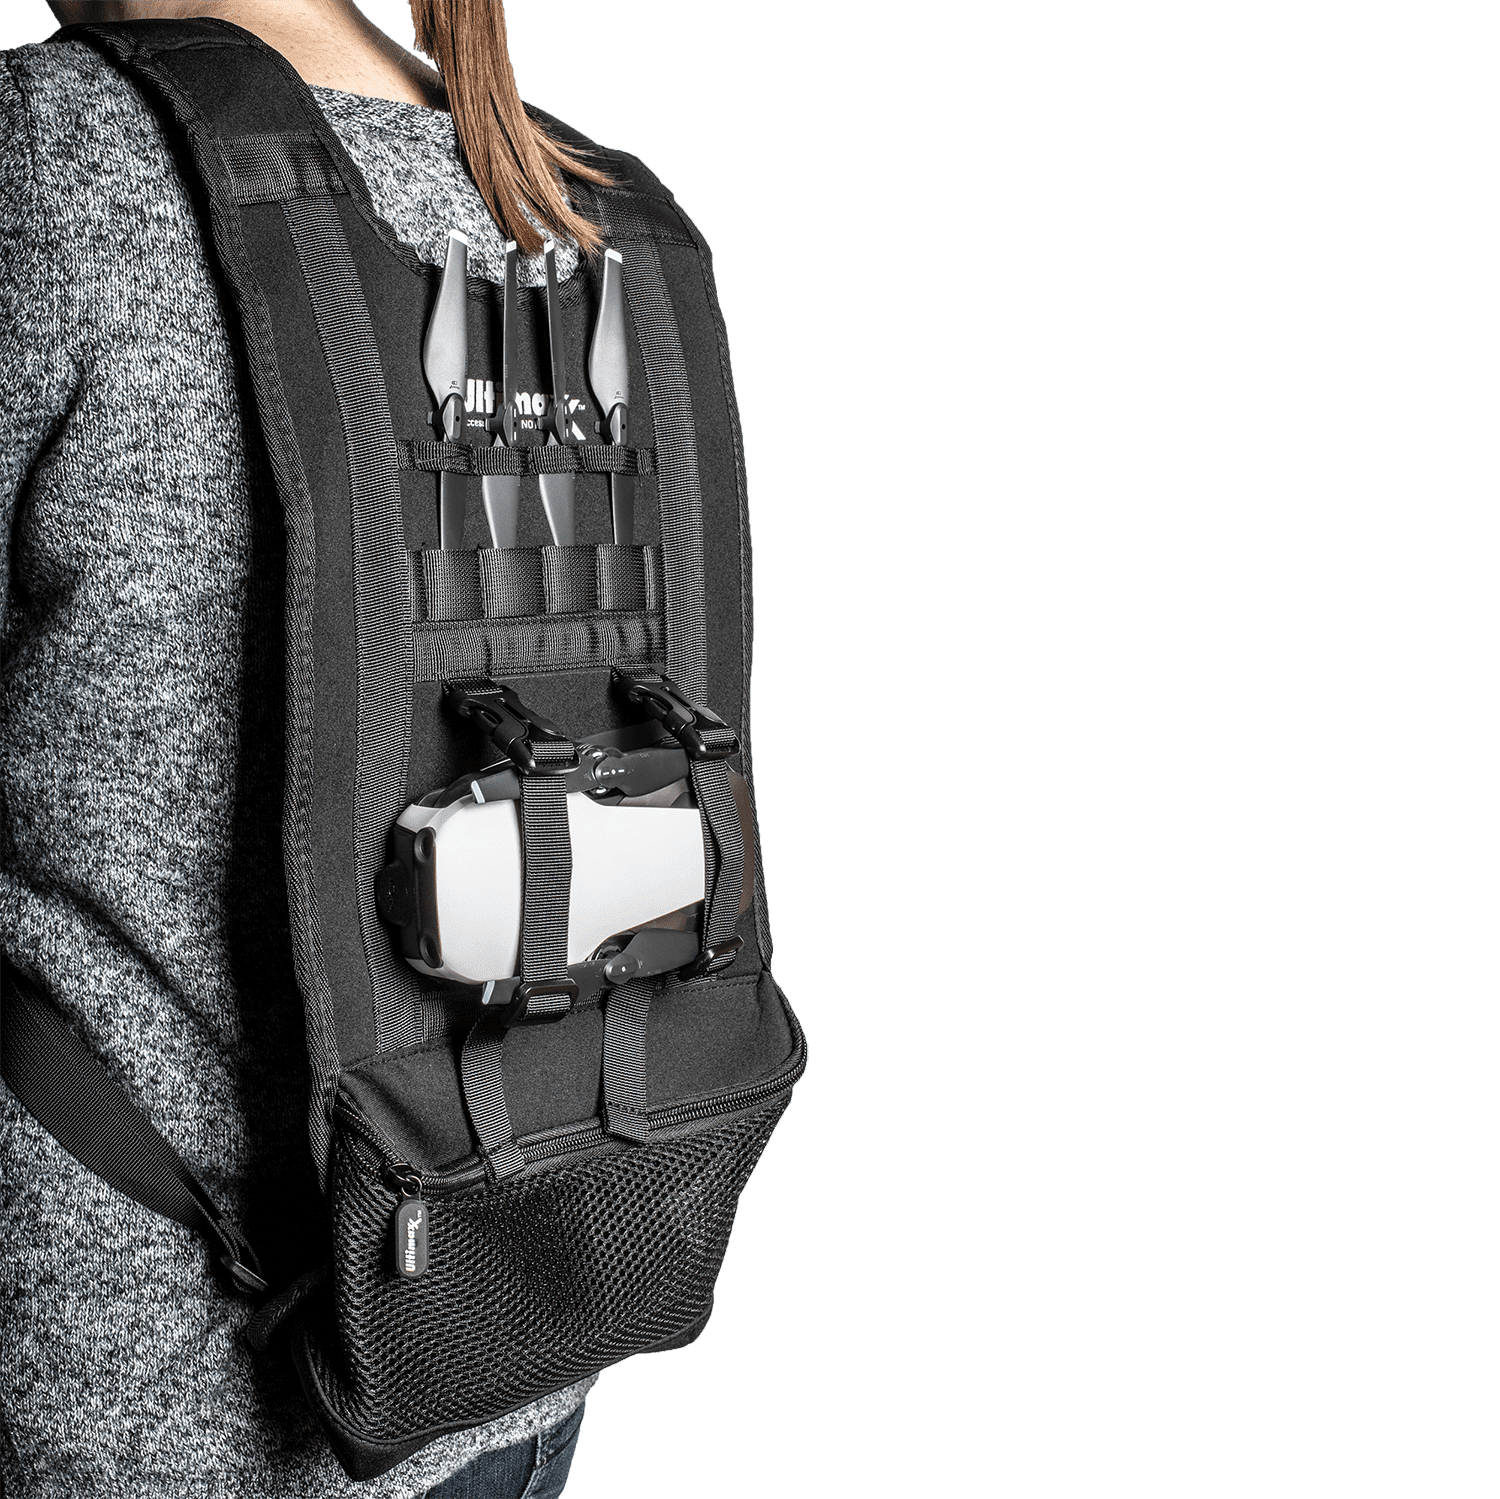 Mavic backpack vest